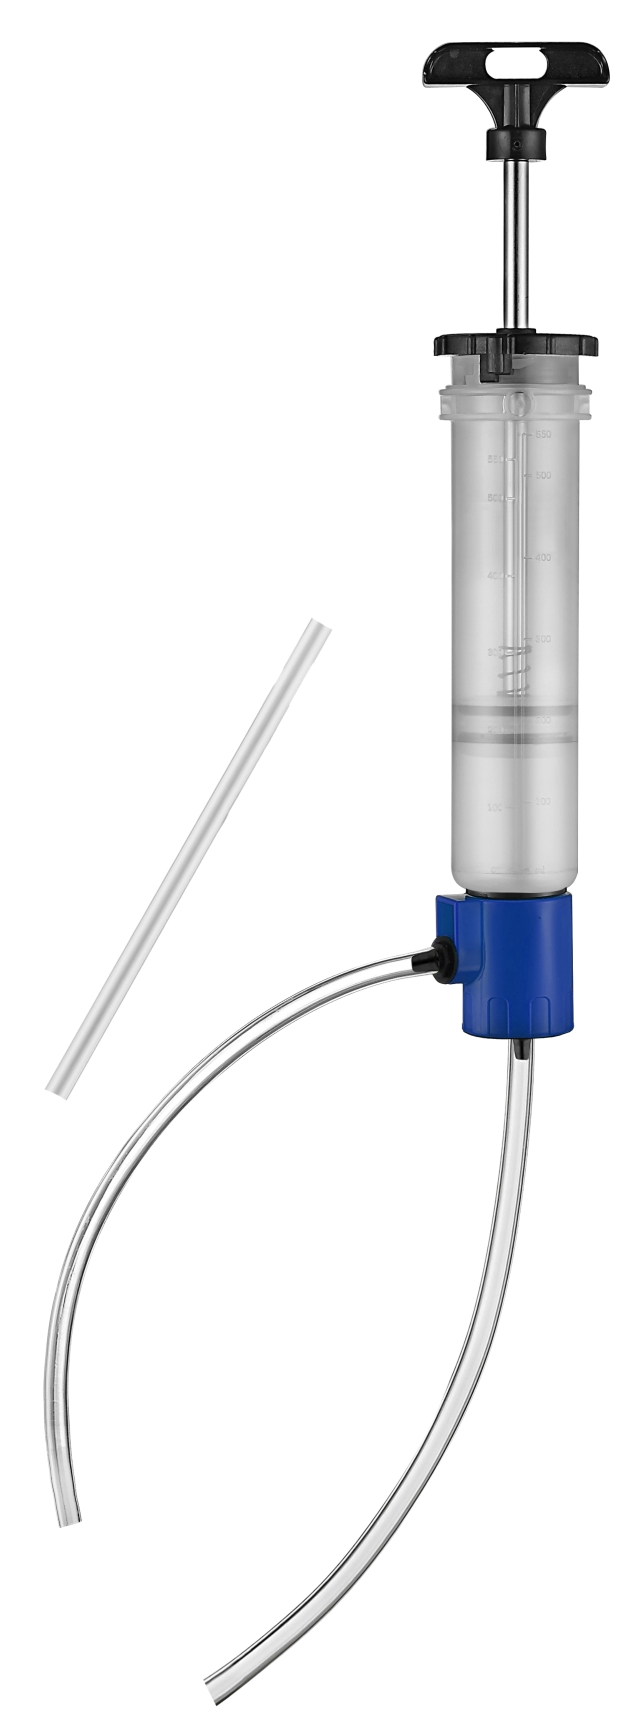 Syringe For AdBlue Supply. Extraction